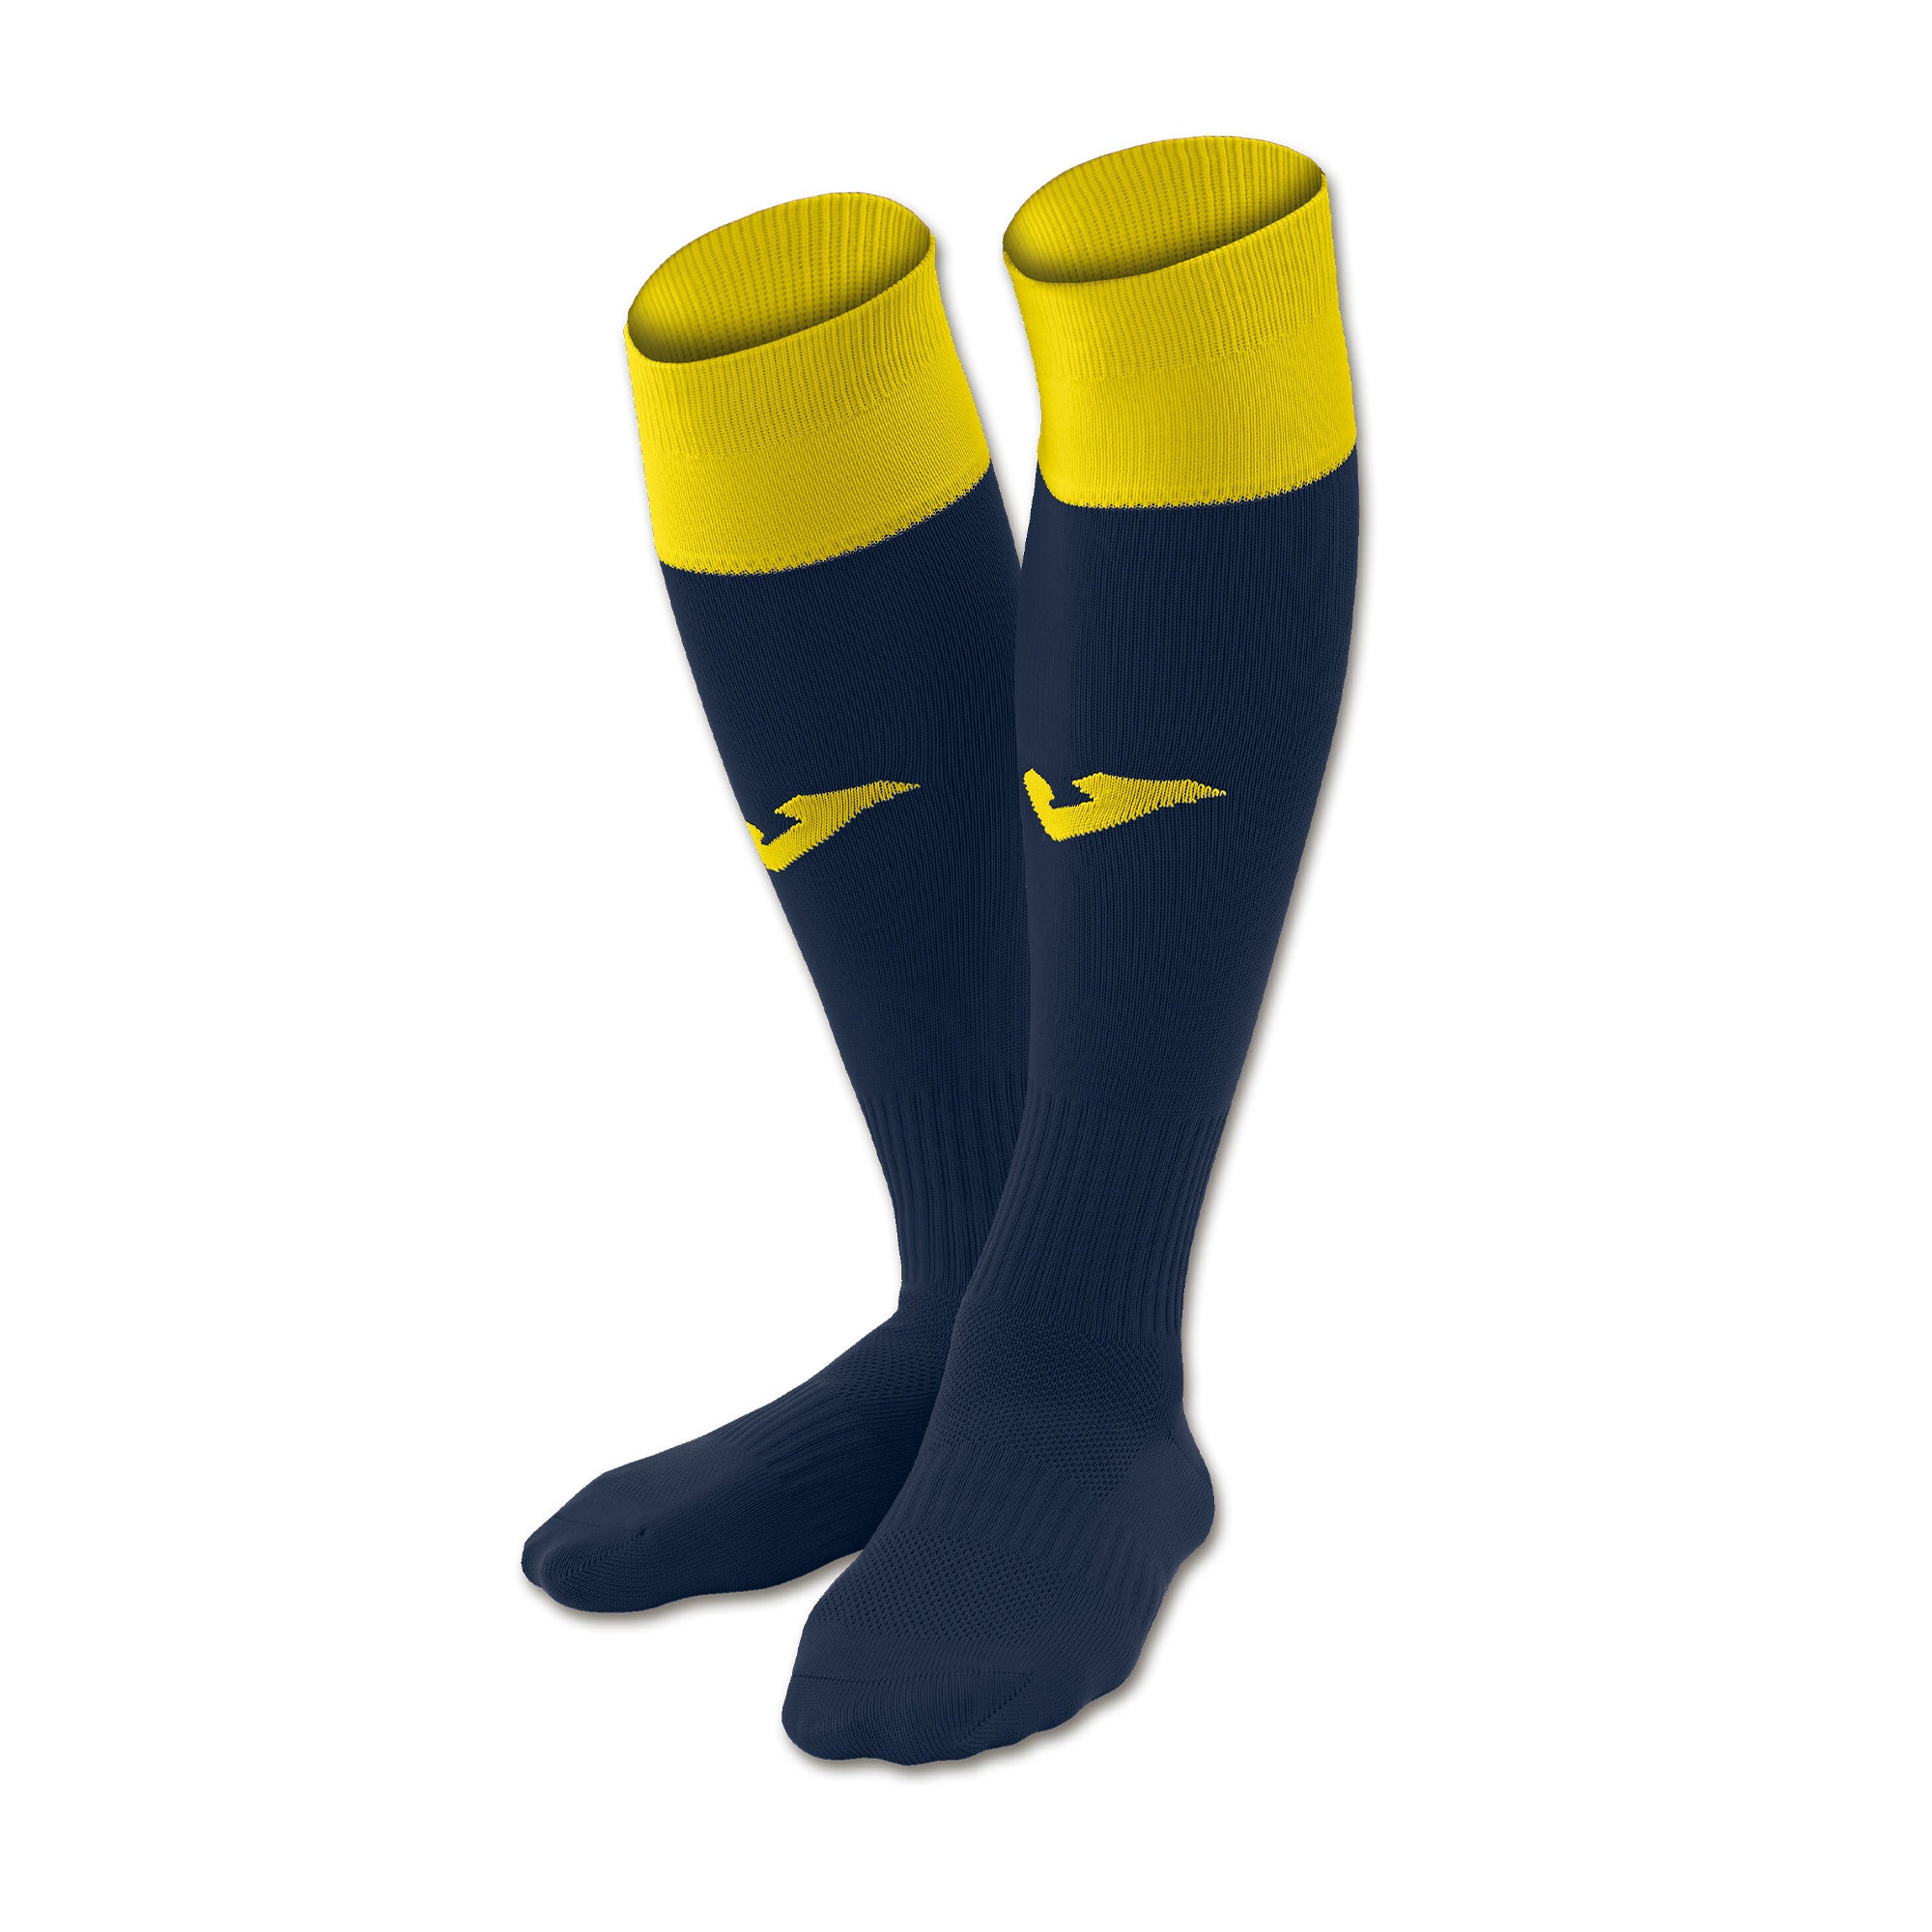 Joma Calico 24 Socks